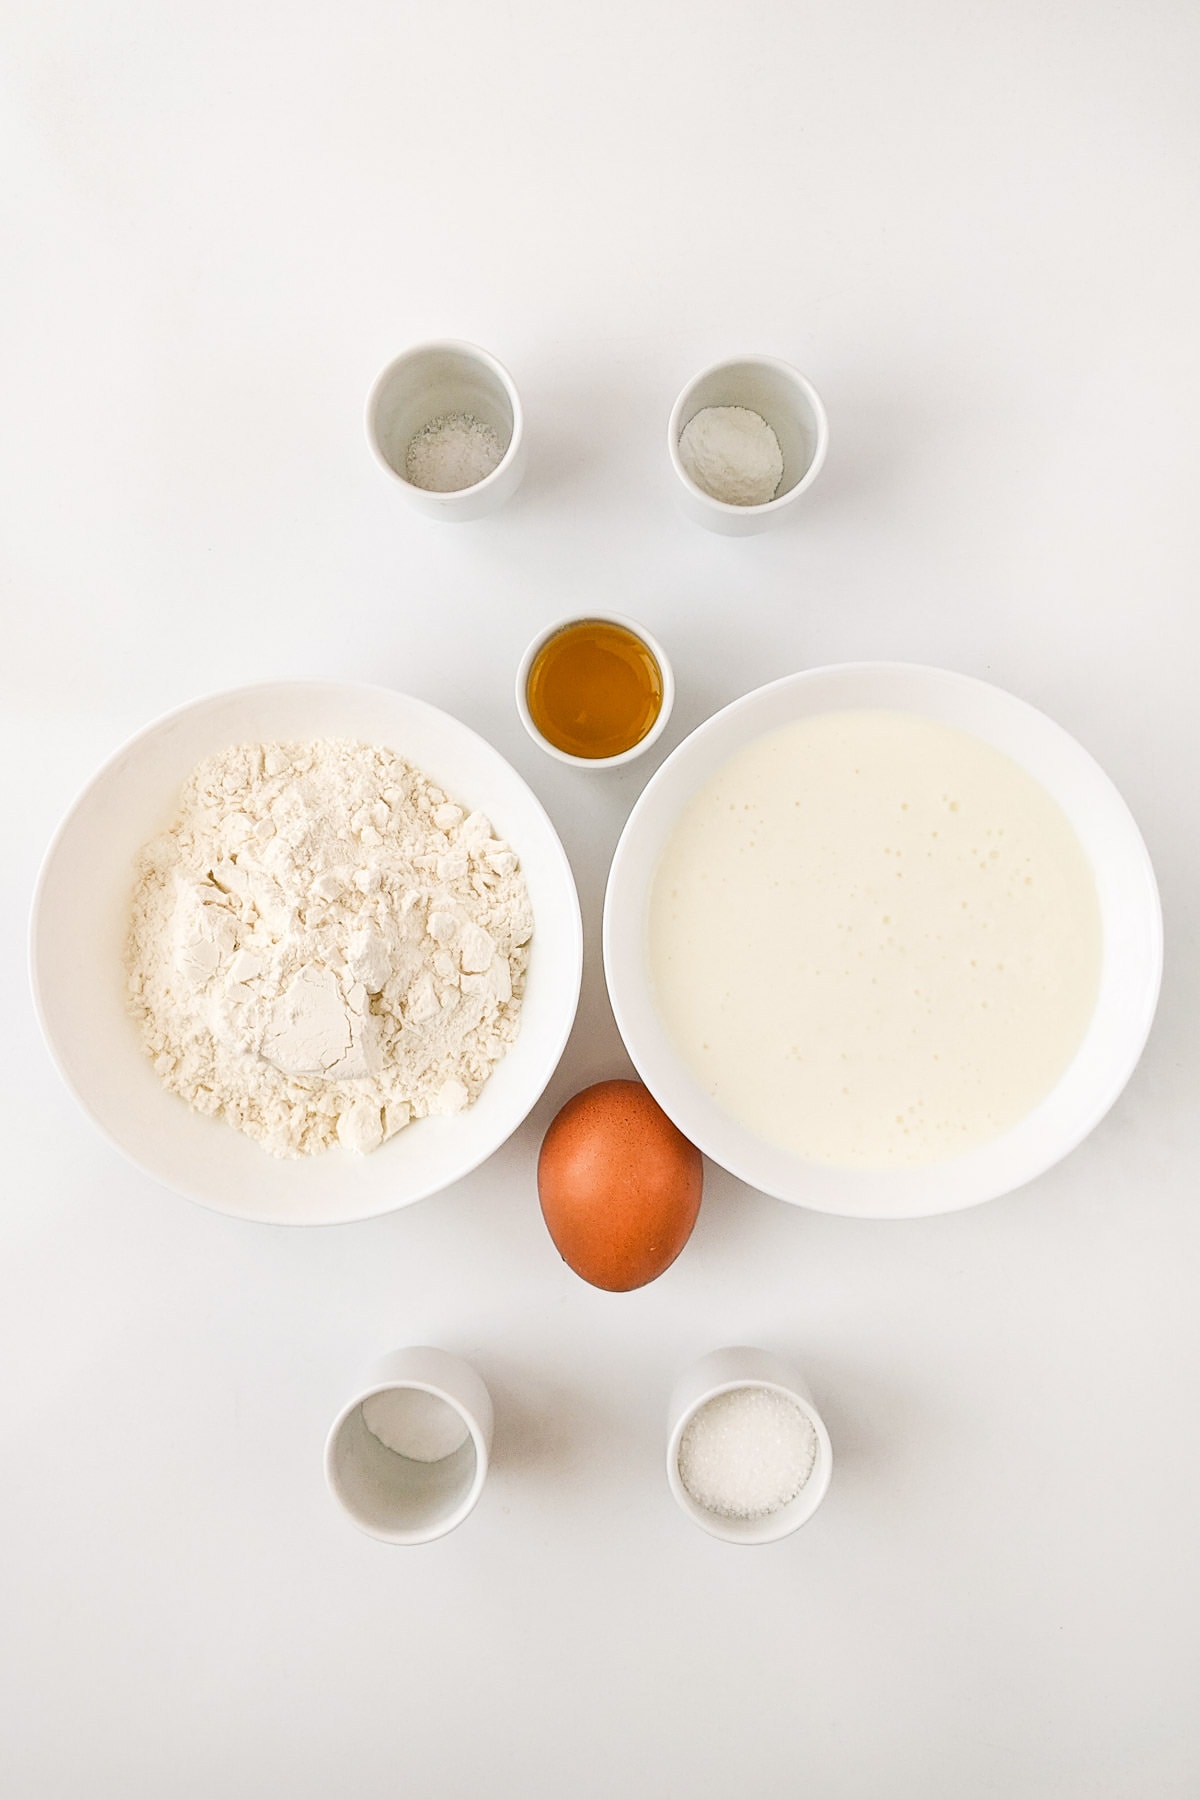 Ingredients for homemade air fryer pancakes.